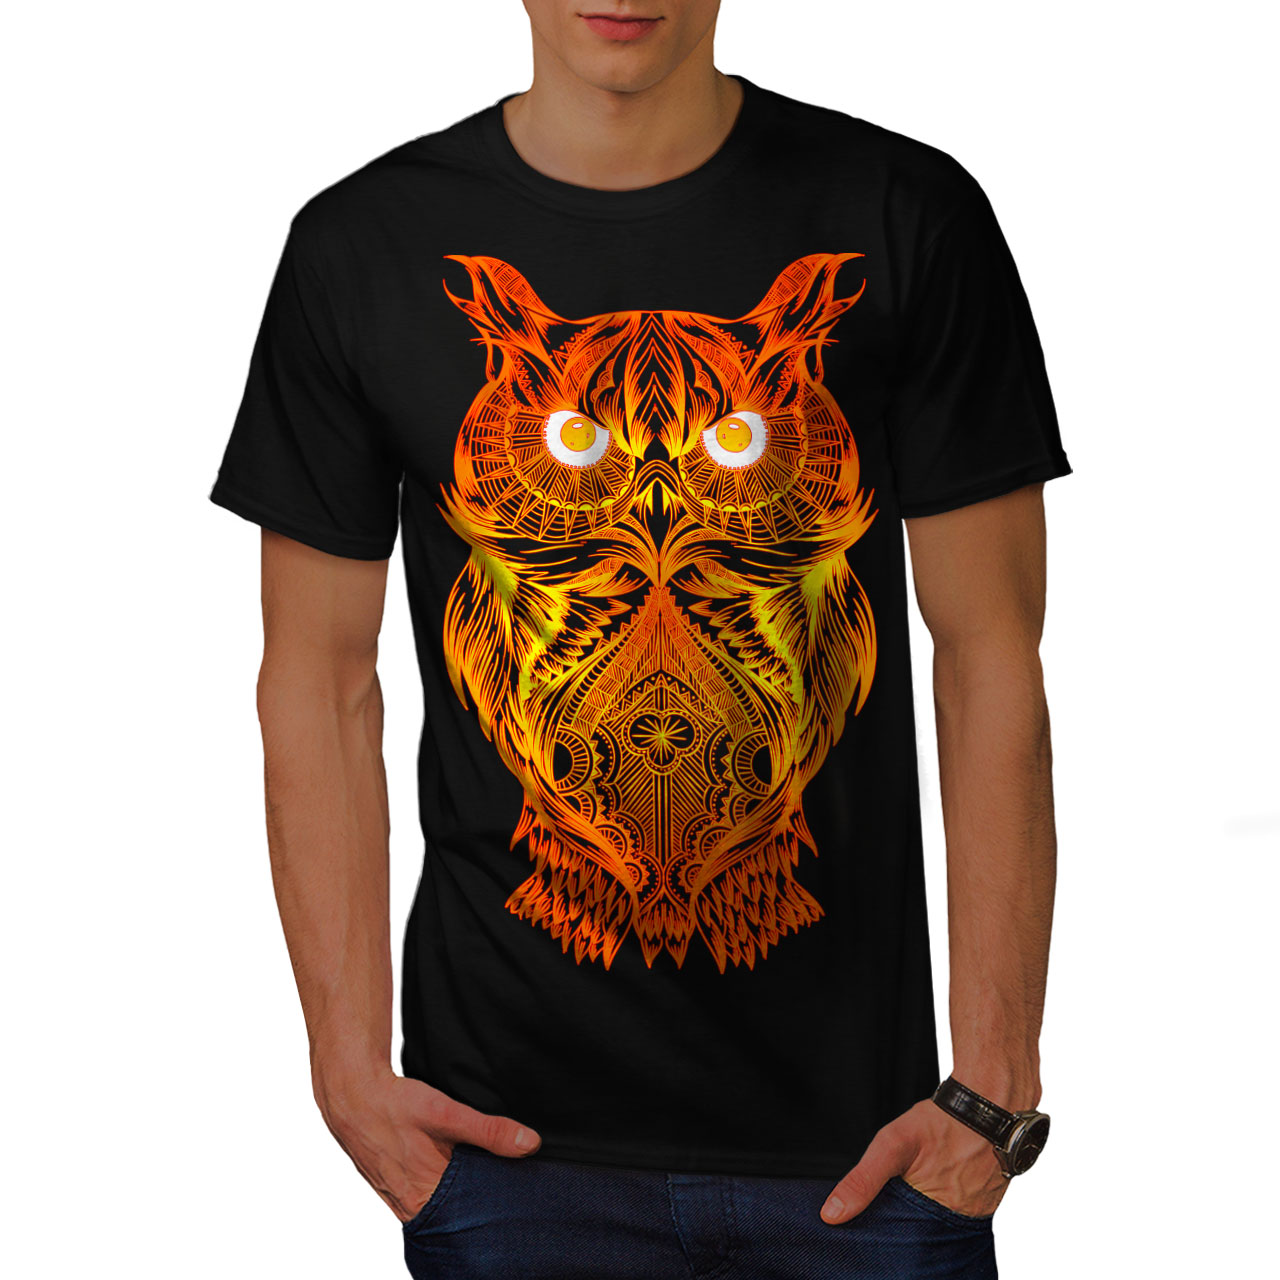 thumbnail 3  - Wellcoda Night Owl On Fire Mens T-shirt, Burning Graphic Design Printed Tee